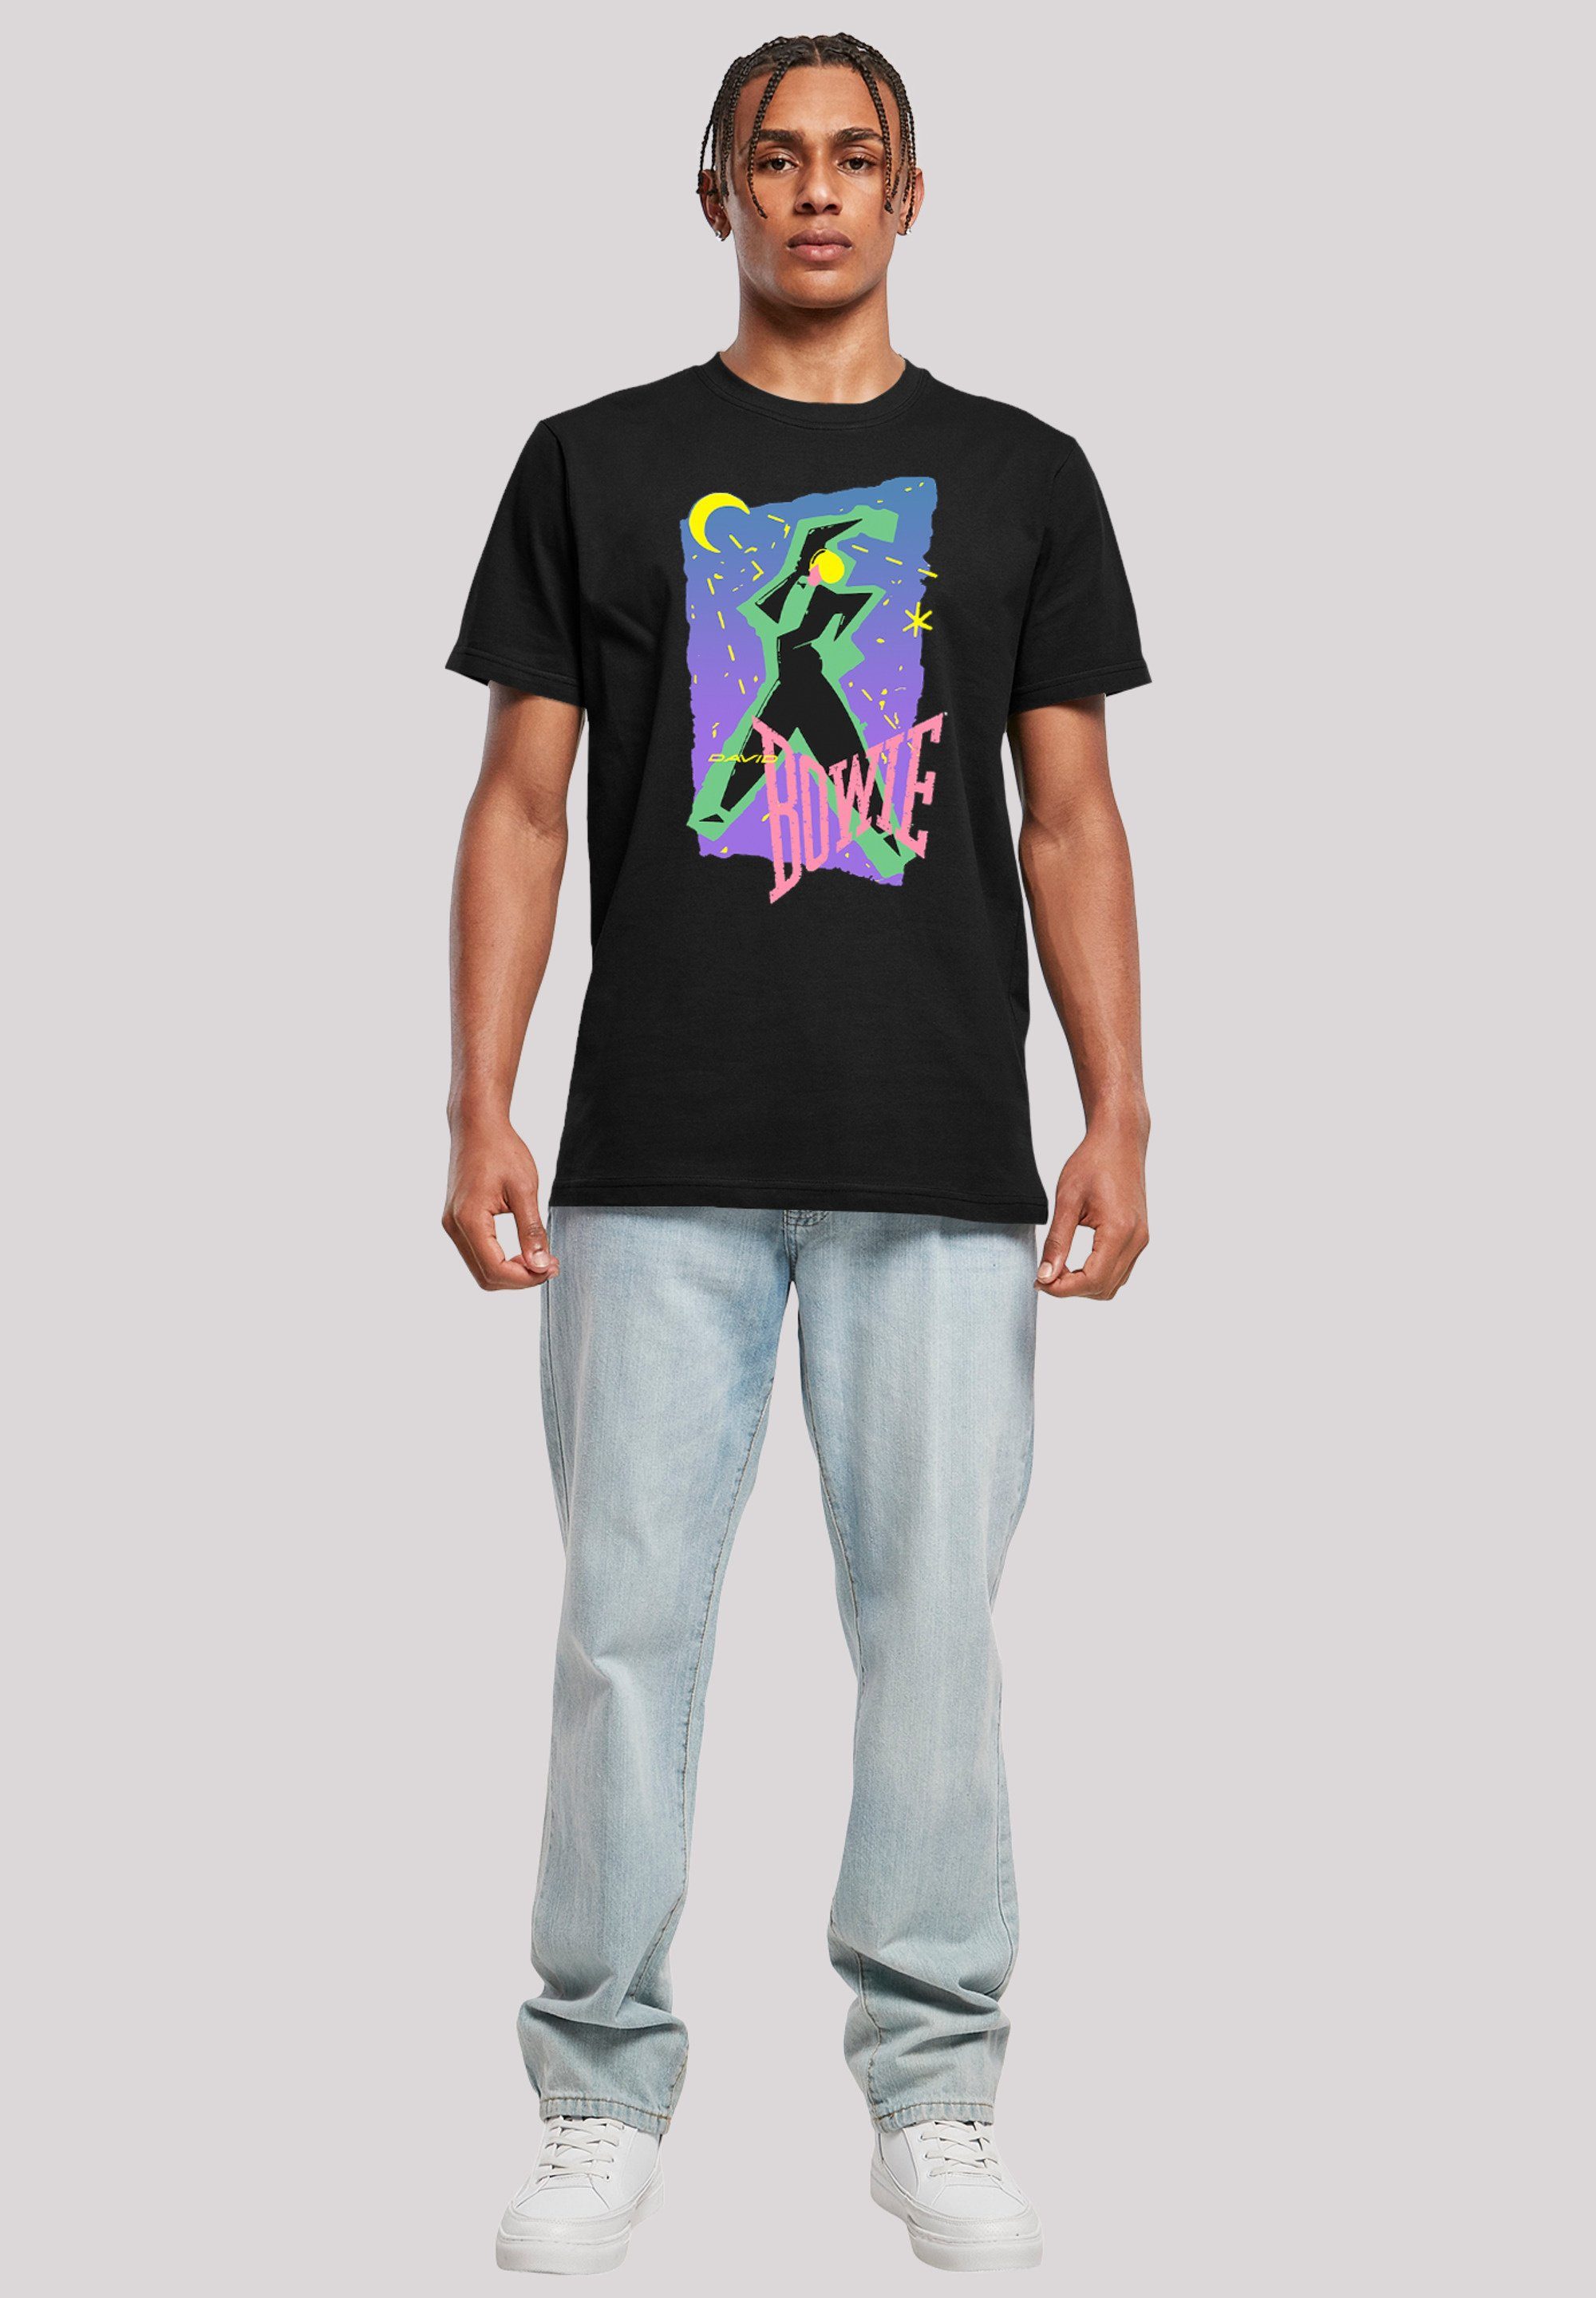 F4NT4STIC schwarz Print Dance T-Shirt Moonlight Bowie David